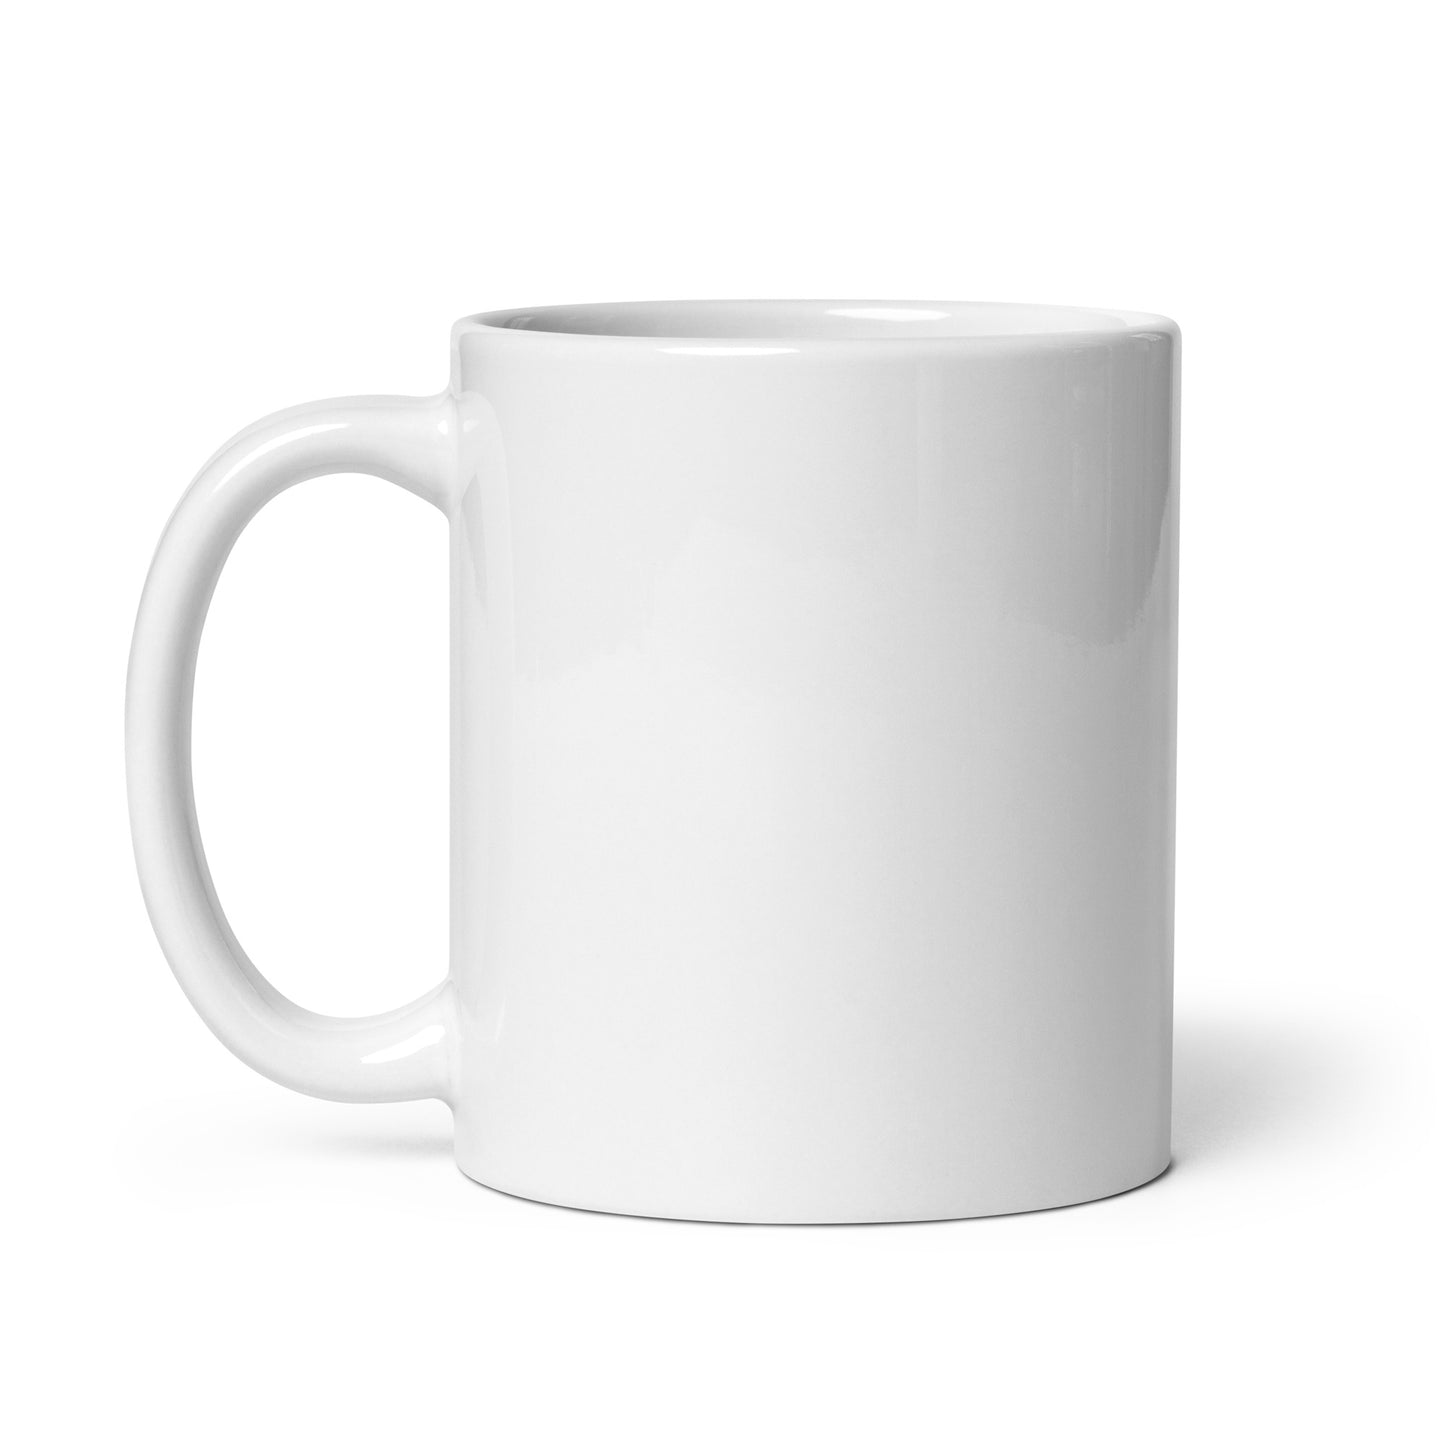 I got this White glossy mug